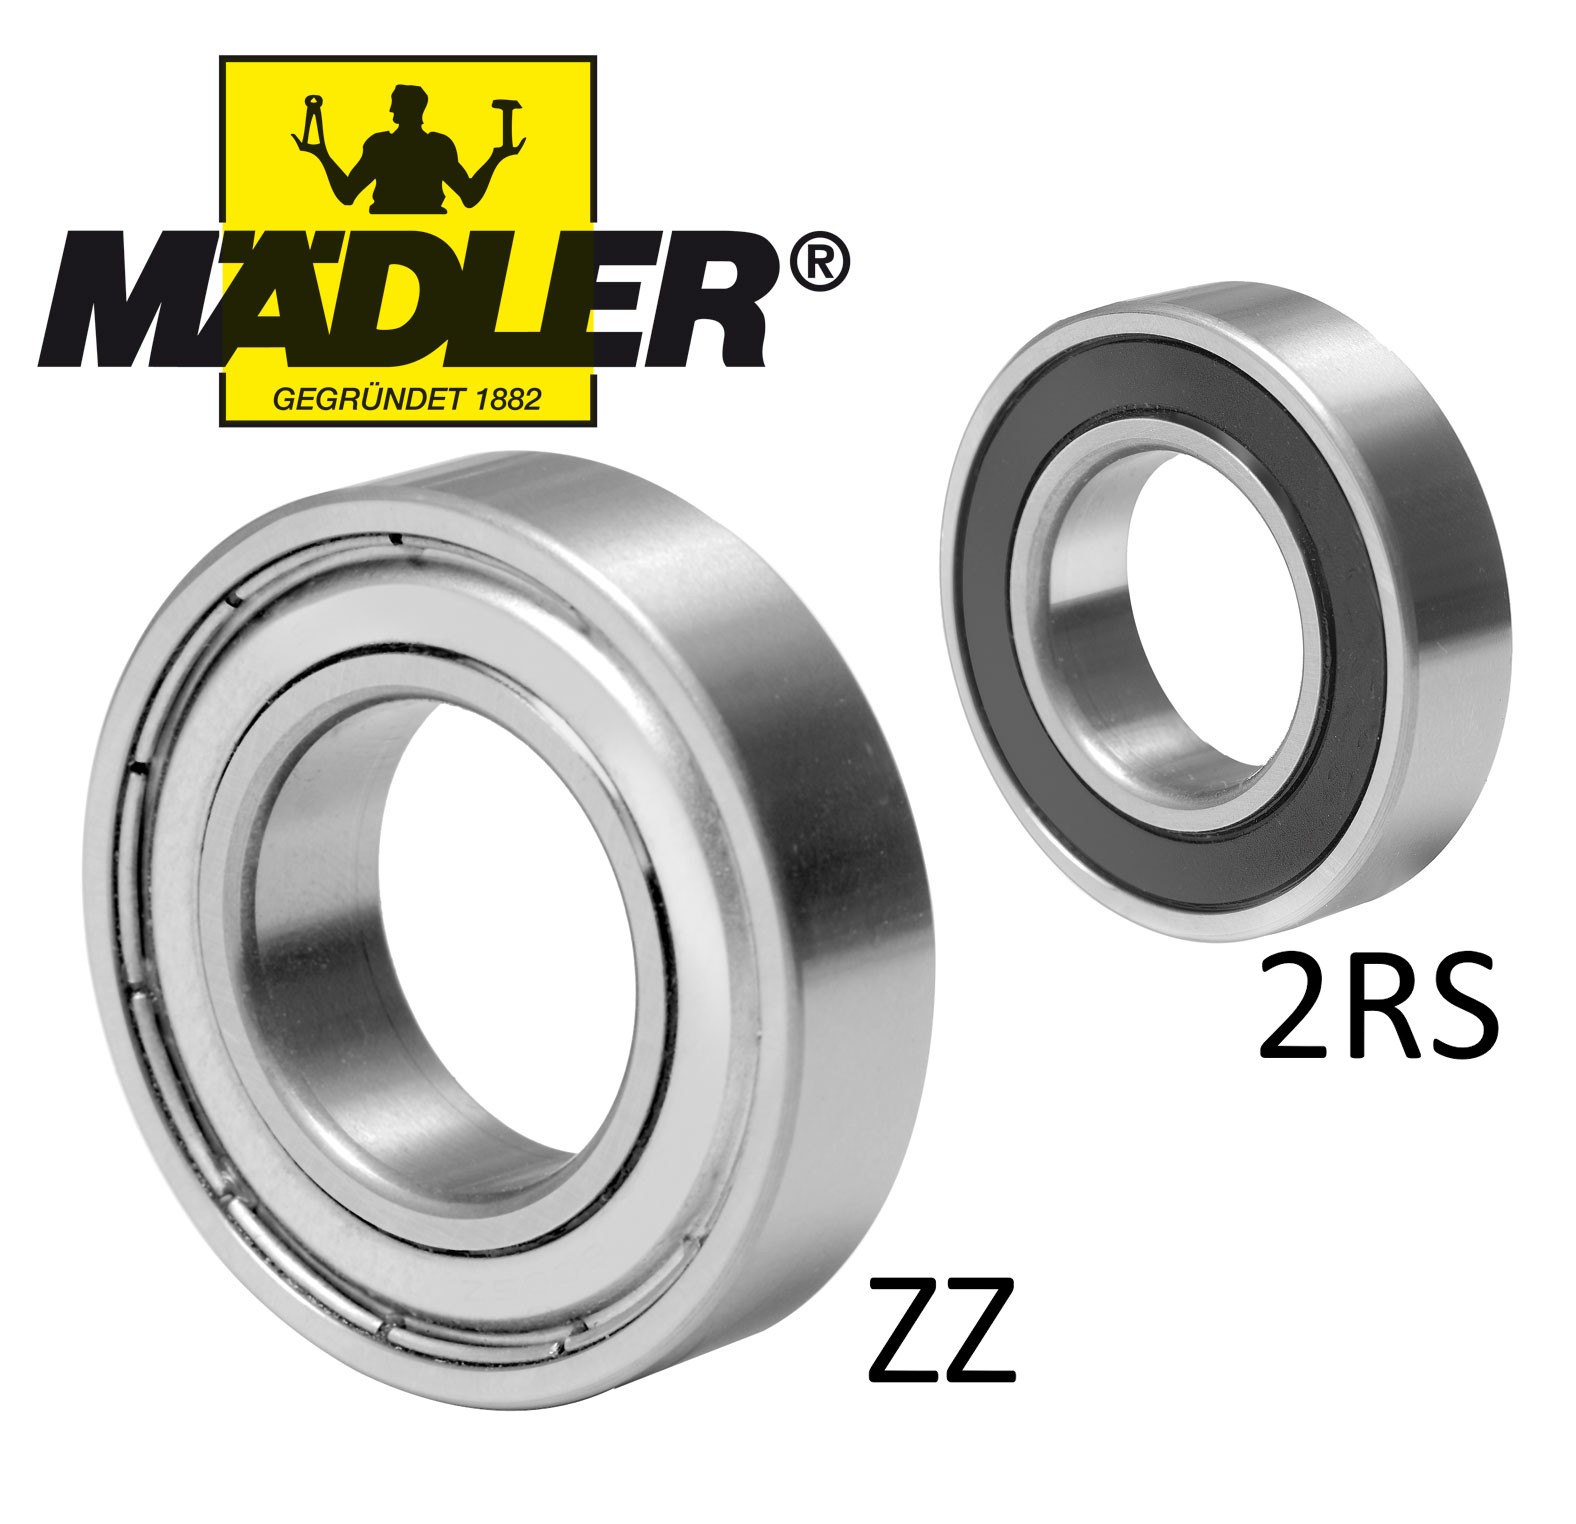 MAEDLER deep groove ball bearing single row inner diameter 8mm 